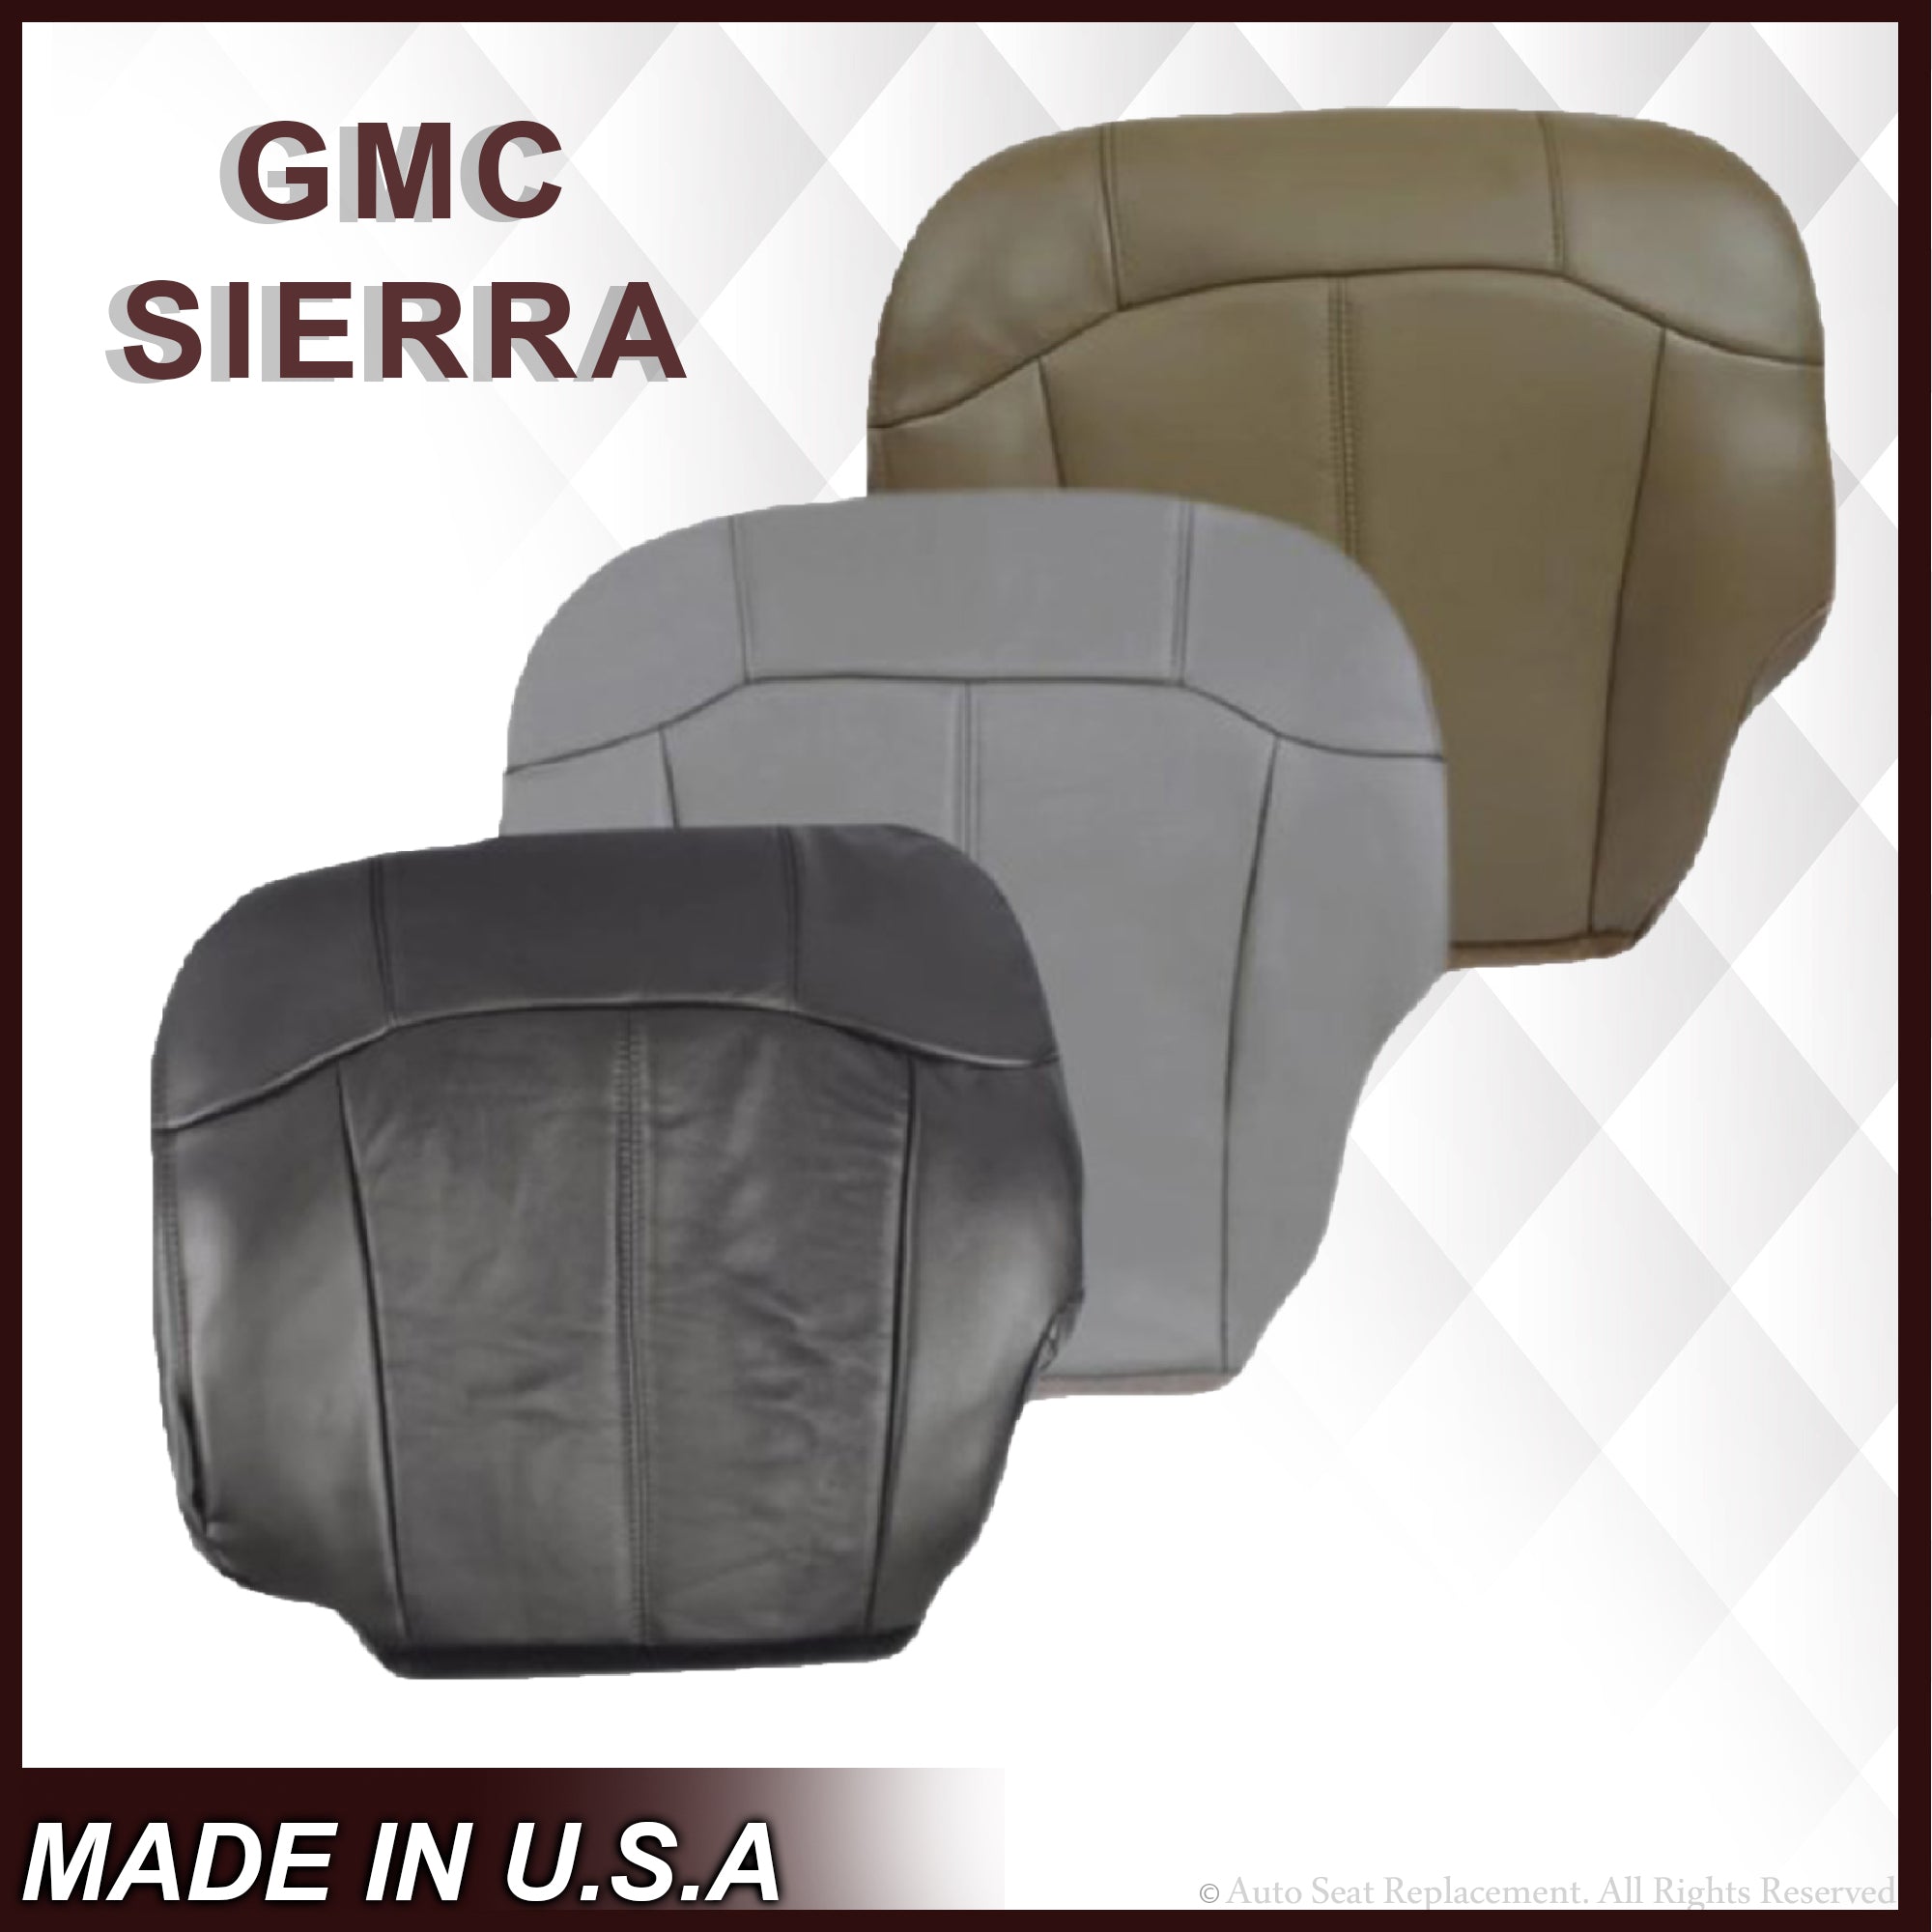 1999-2002 Chevy Silverado Seat Cover in Medium Dark Oak Tan (trim code 672  or 67i)